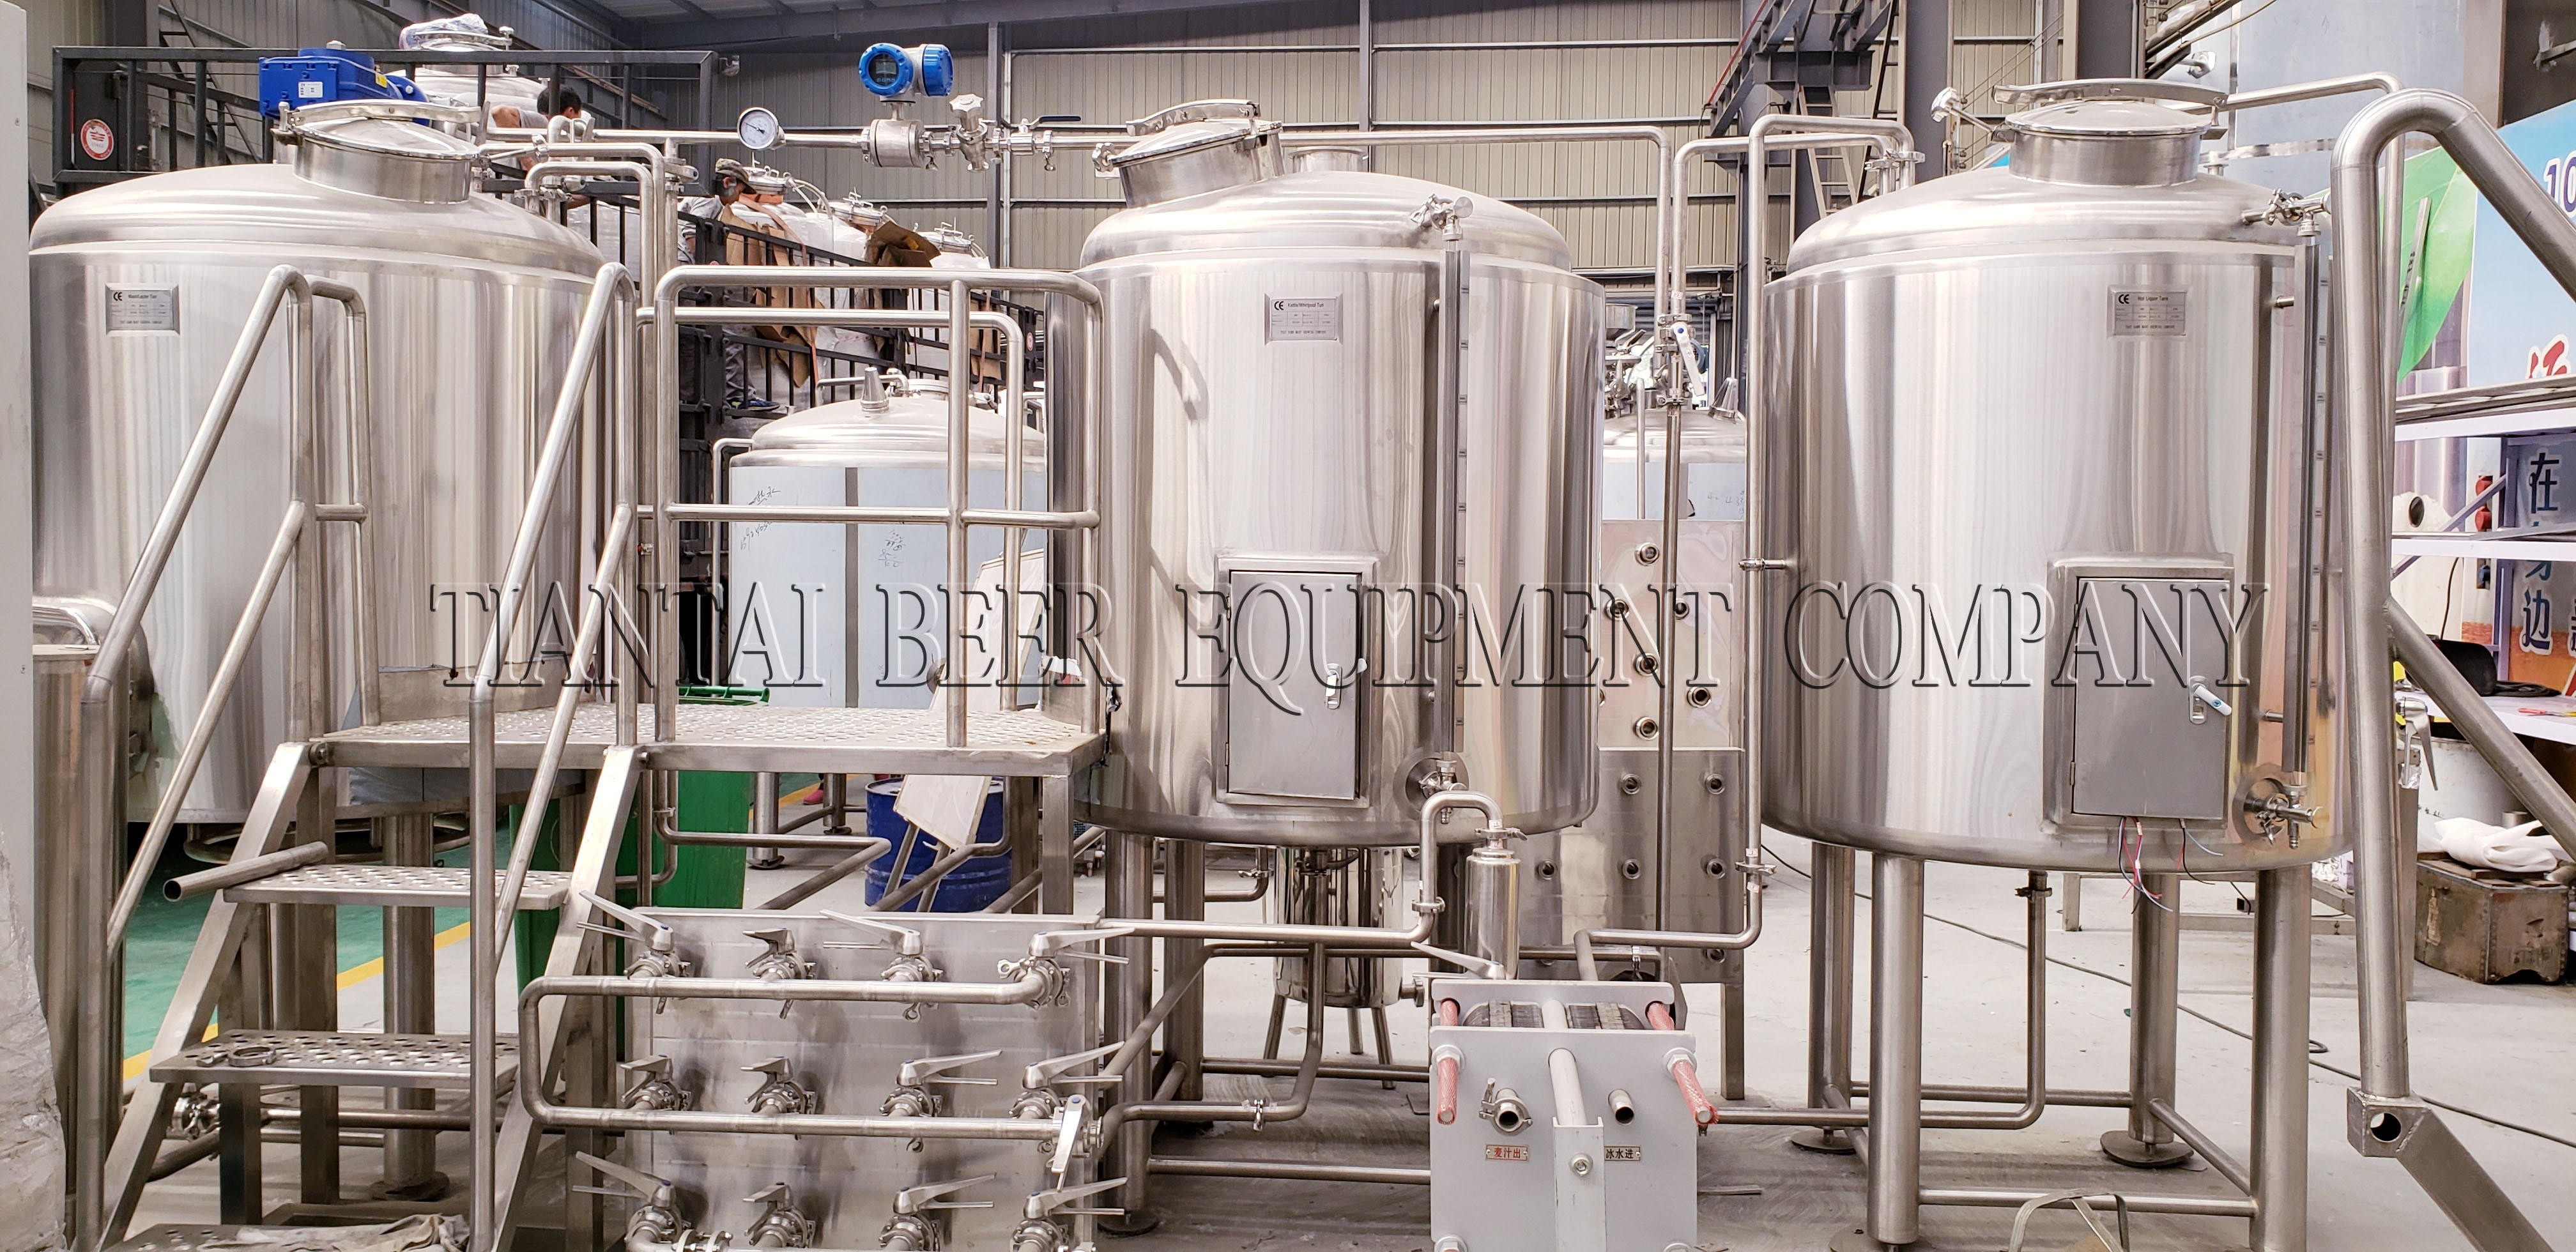 <b>800L Beer Brewery system</b>